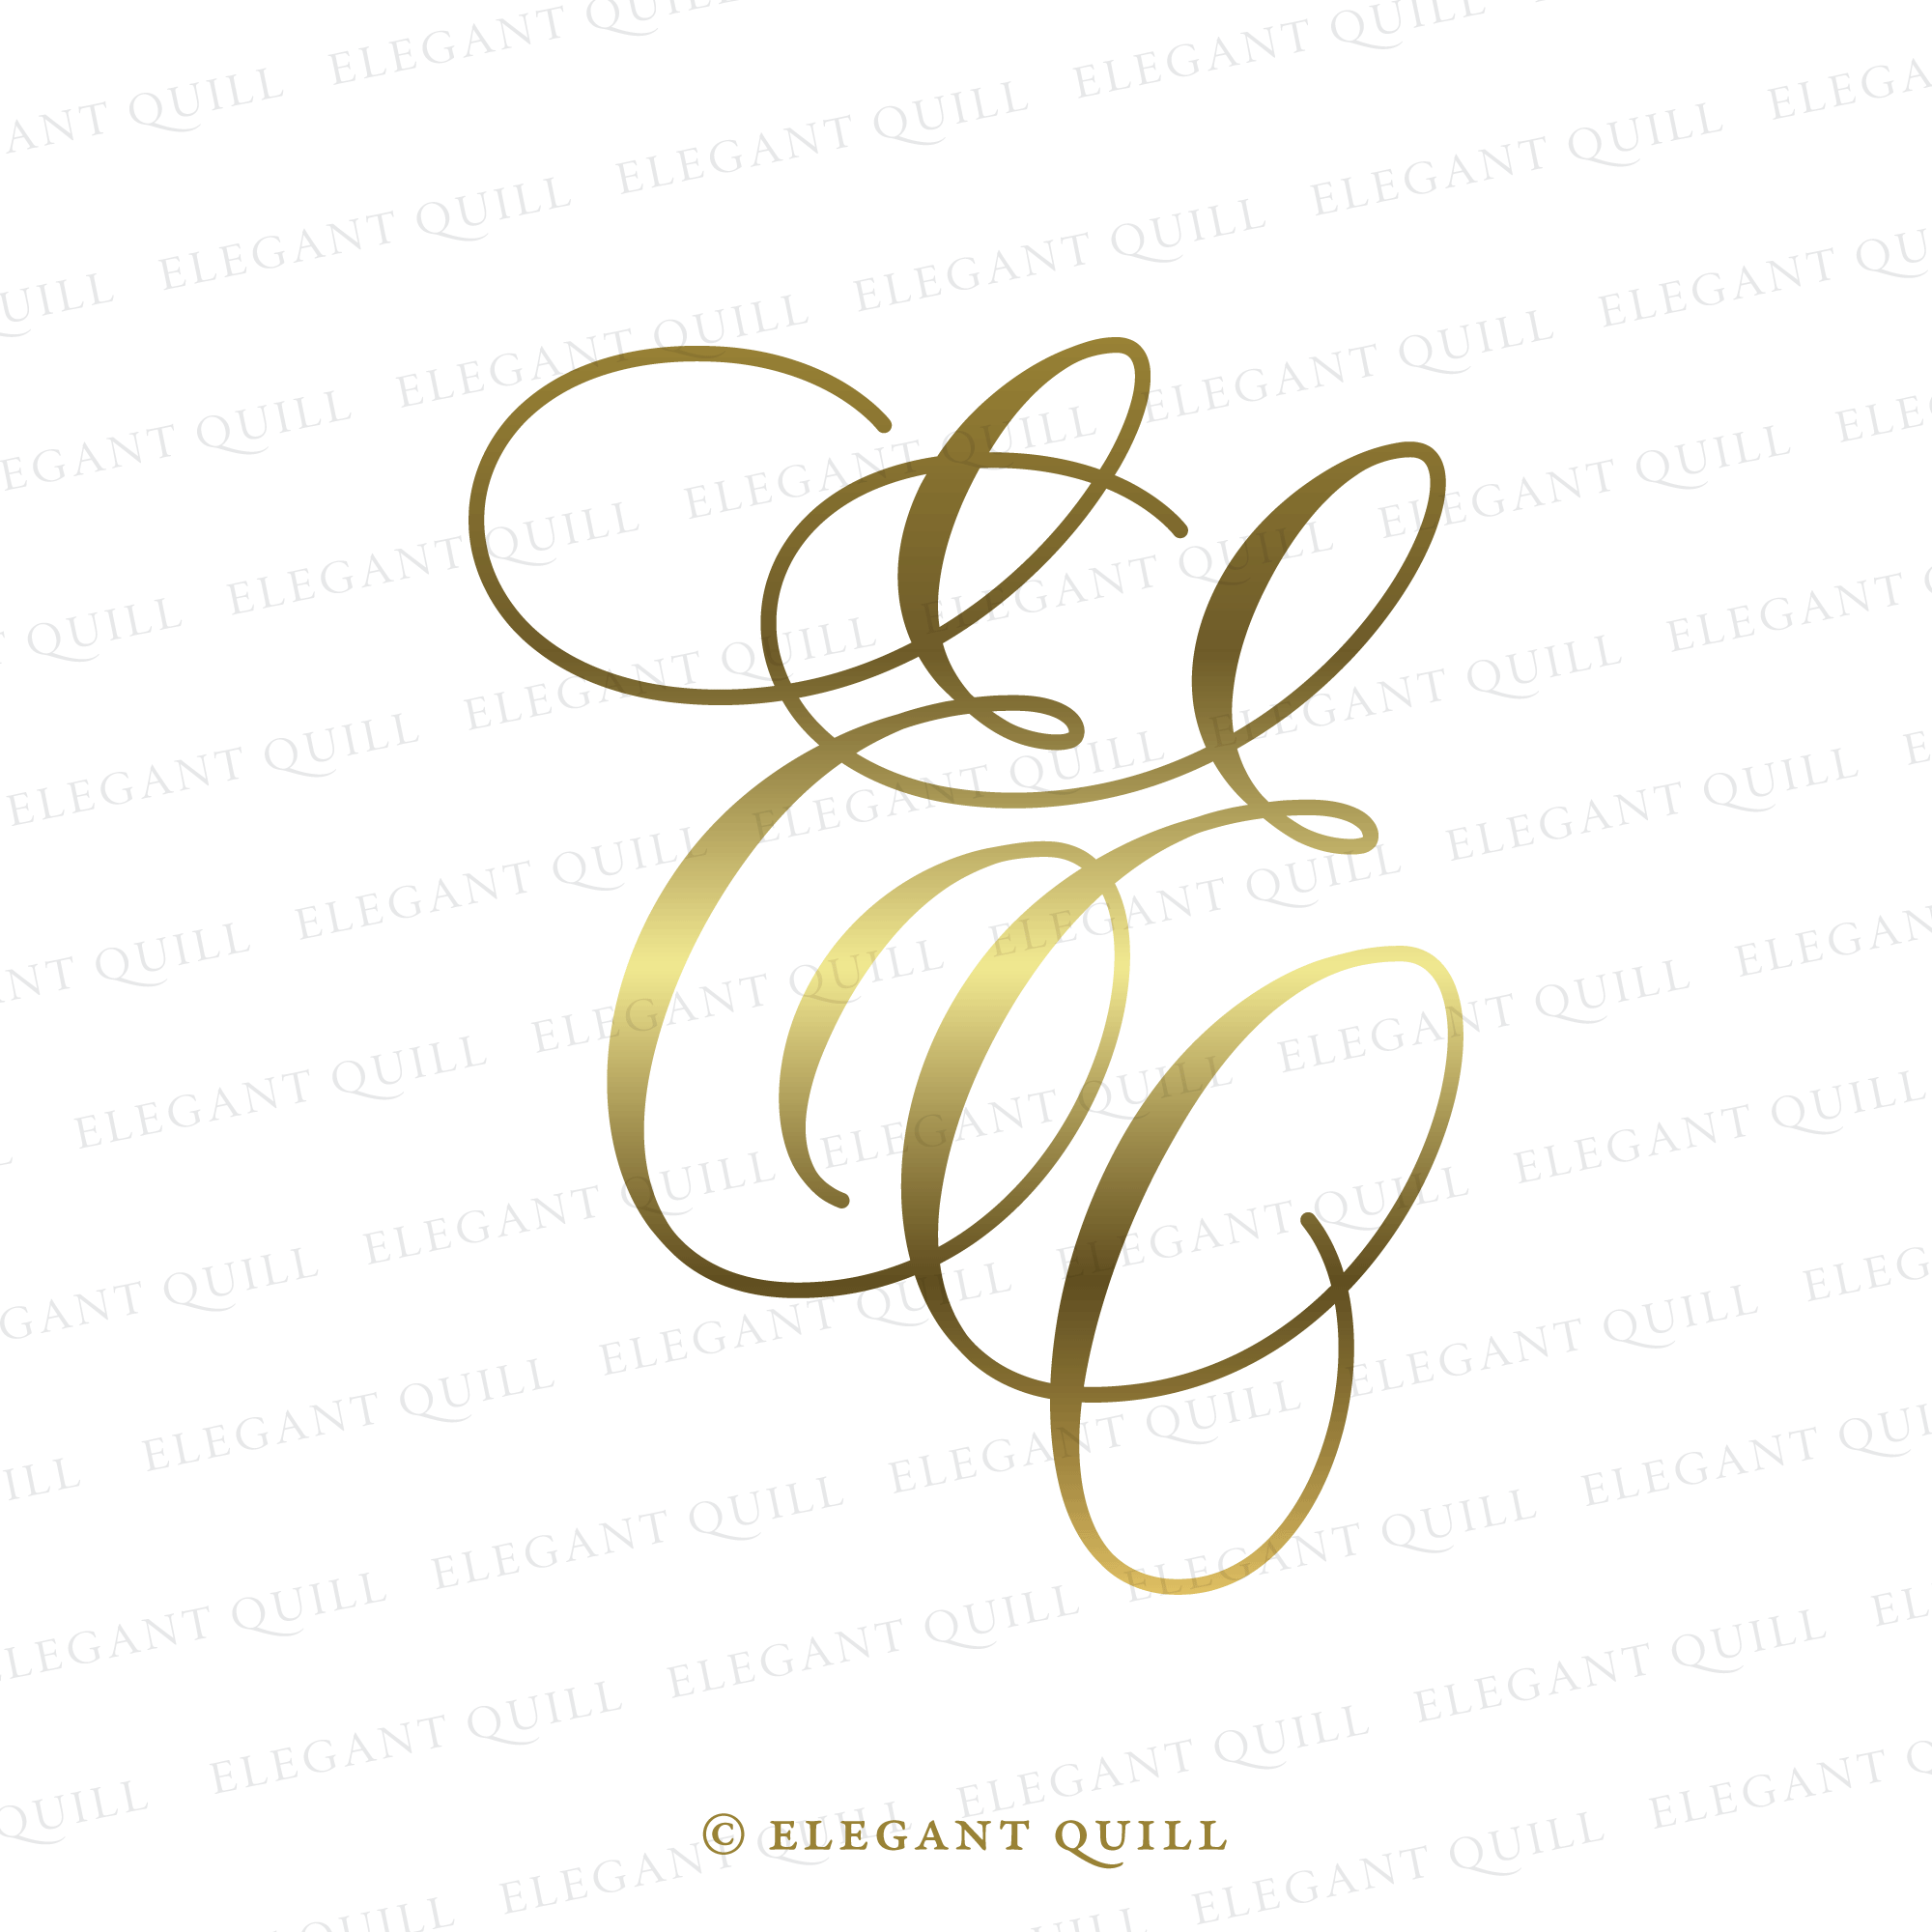 2 Letter Monogram With Letters HW Digital Download Wedding 